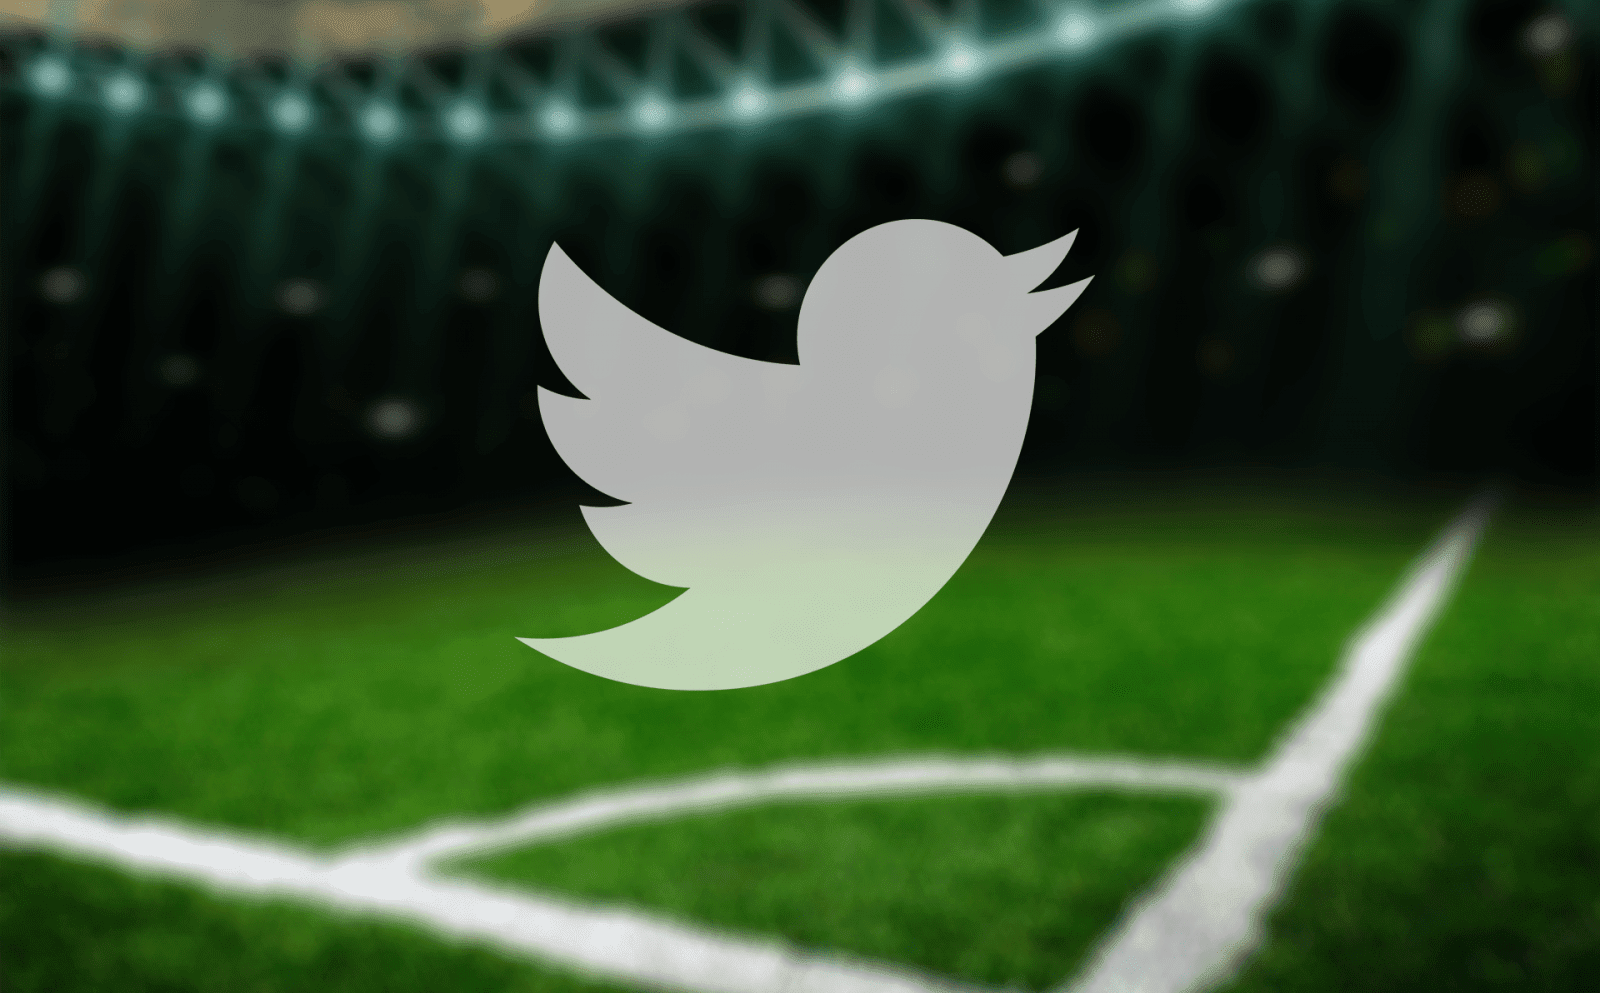 Copa 2014 e a análise de dados no Twitter